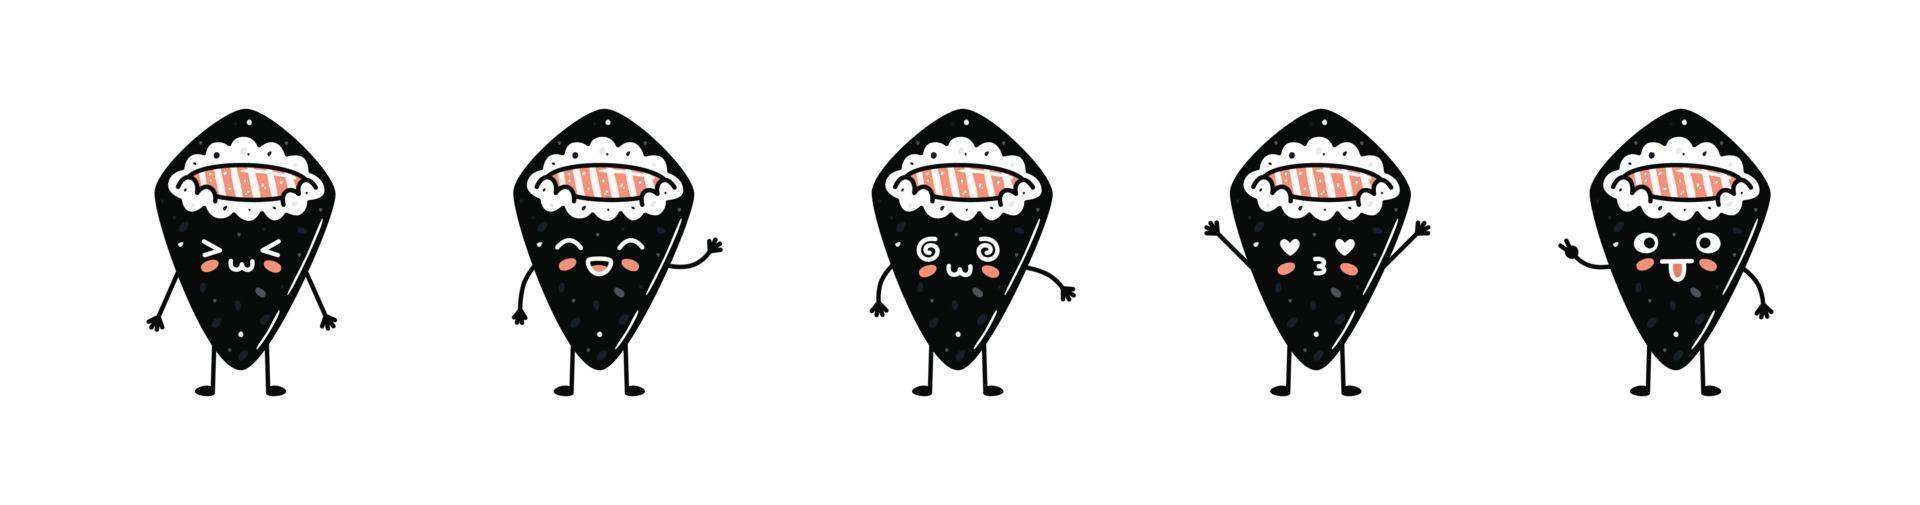 reeks van kawaii temaki sushi mascottes in tekenfilm stijl vector